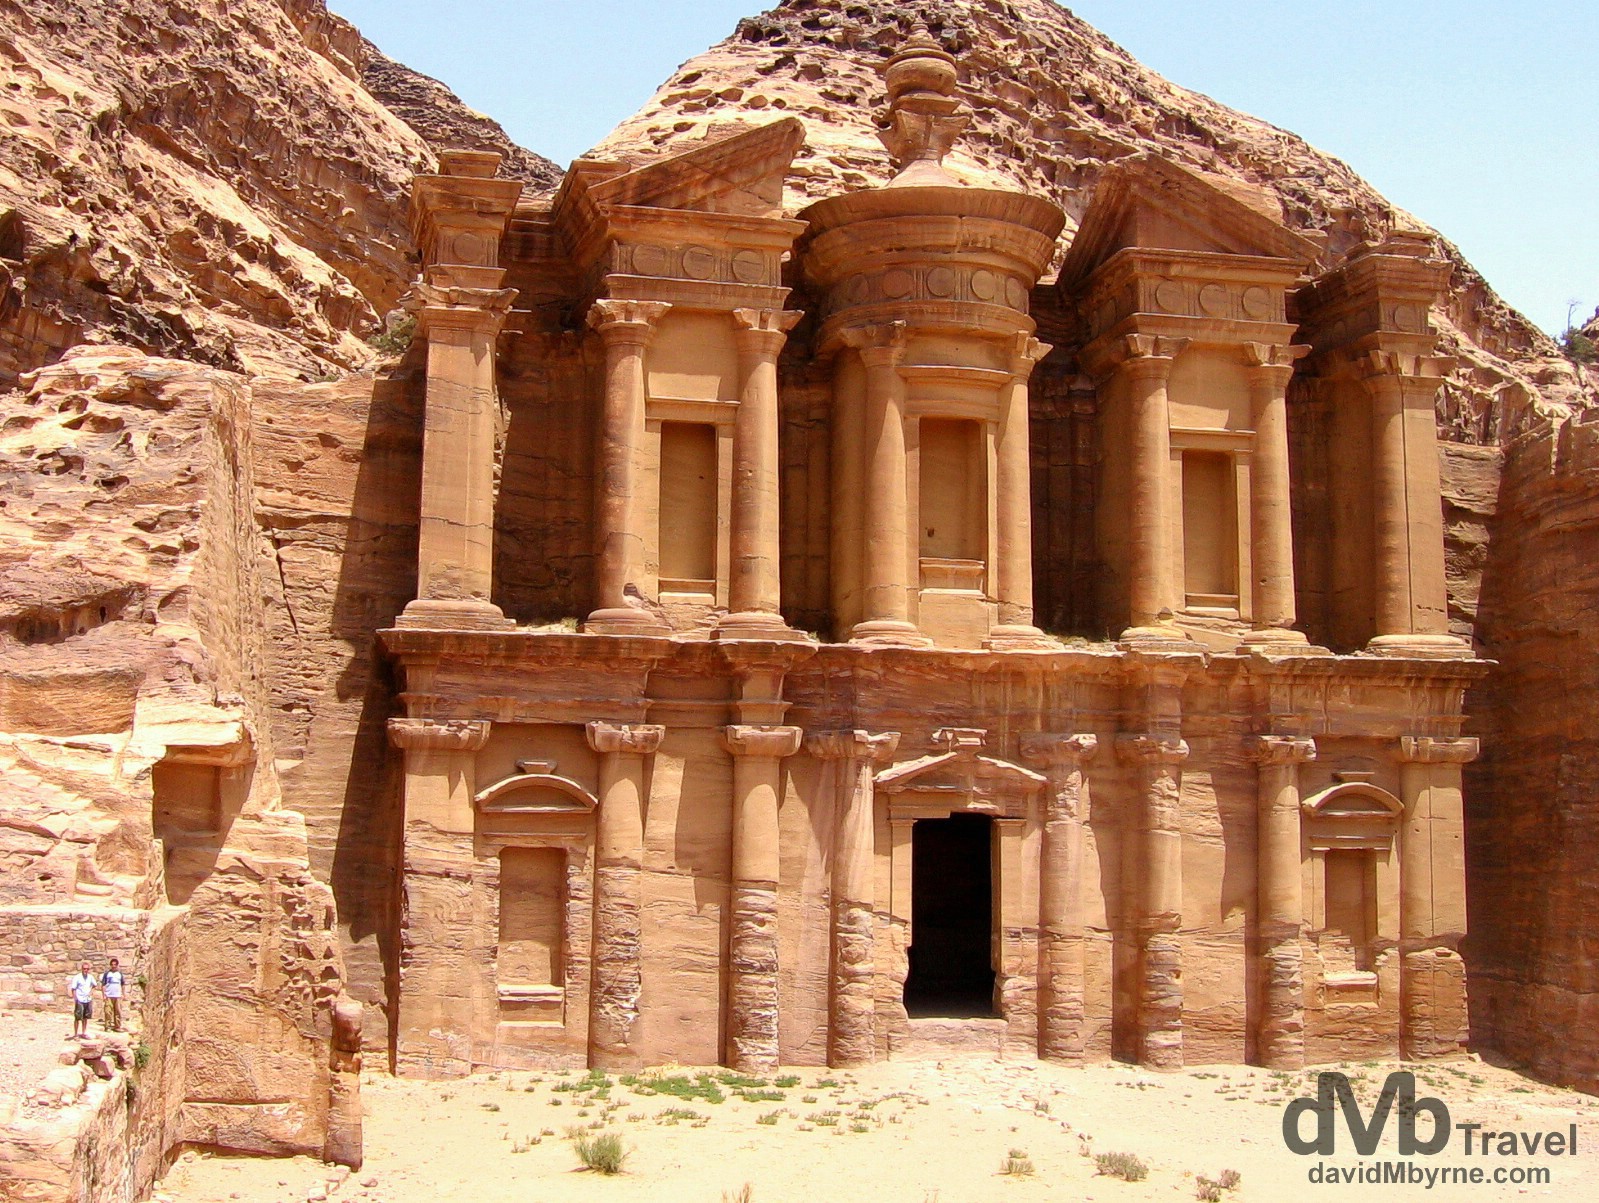 El Deir (The Monastery), one of the largest buildings in Petra, Jordan. April 27, 2008.